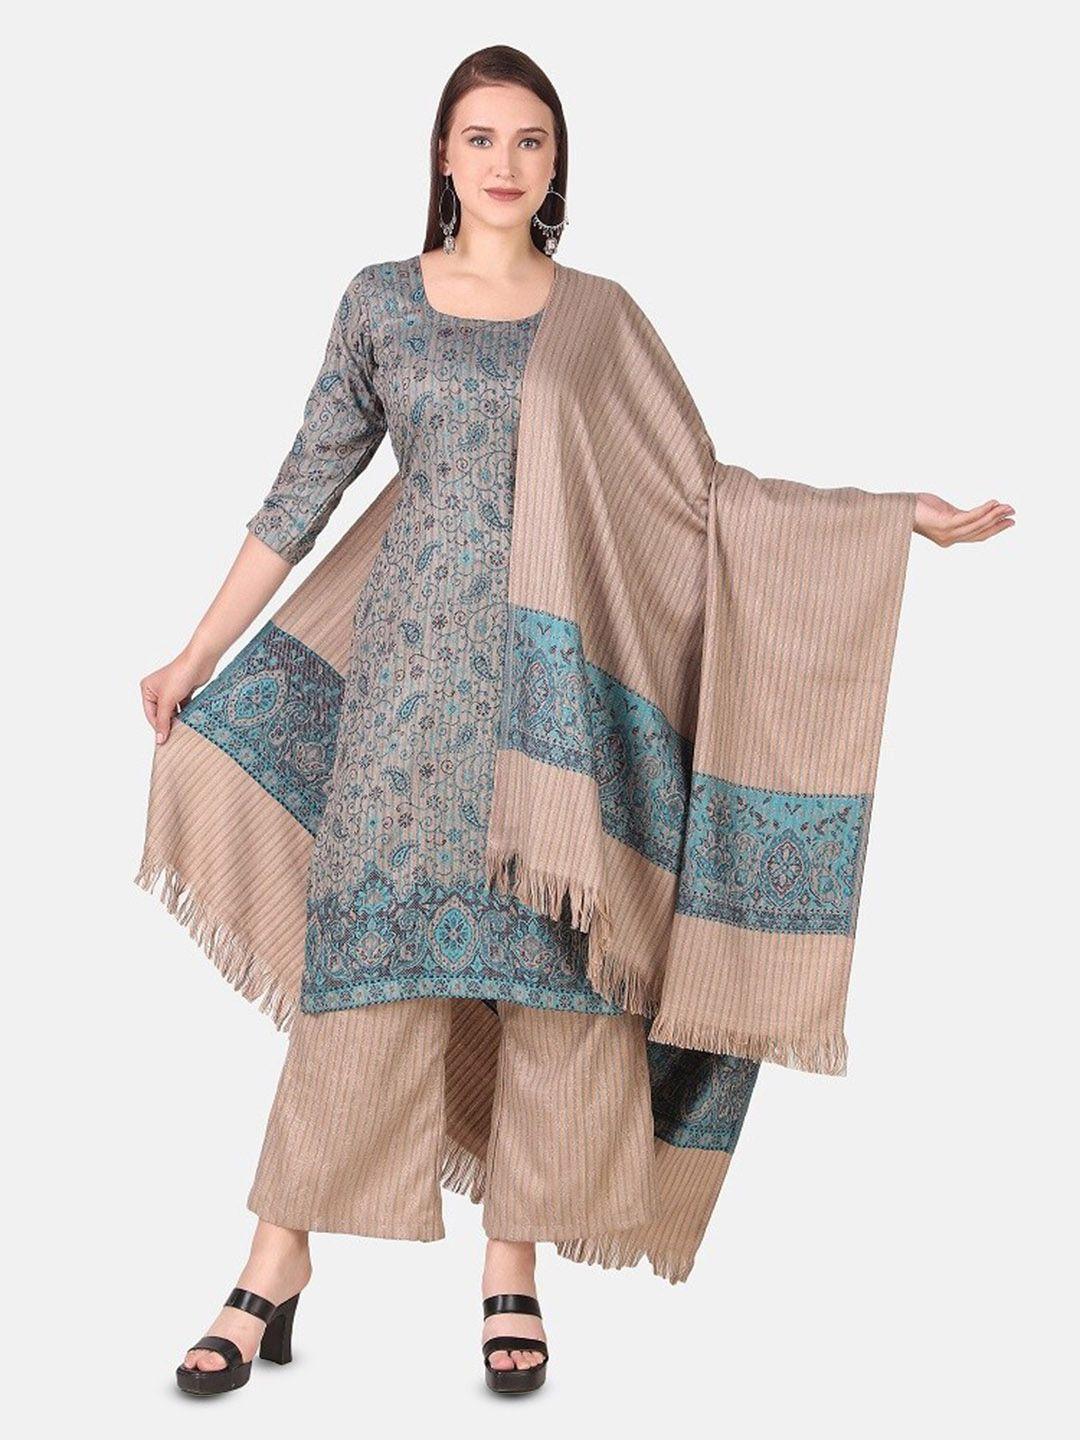 femloom ethnic motifs woven design unstitched dress material